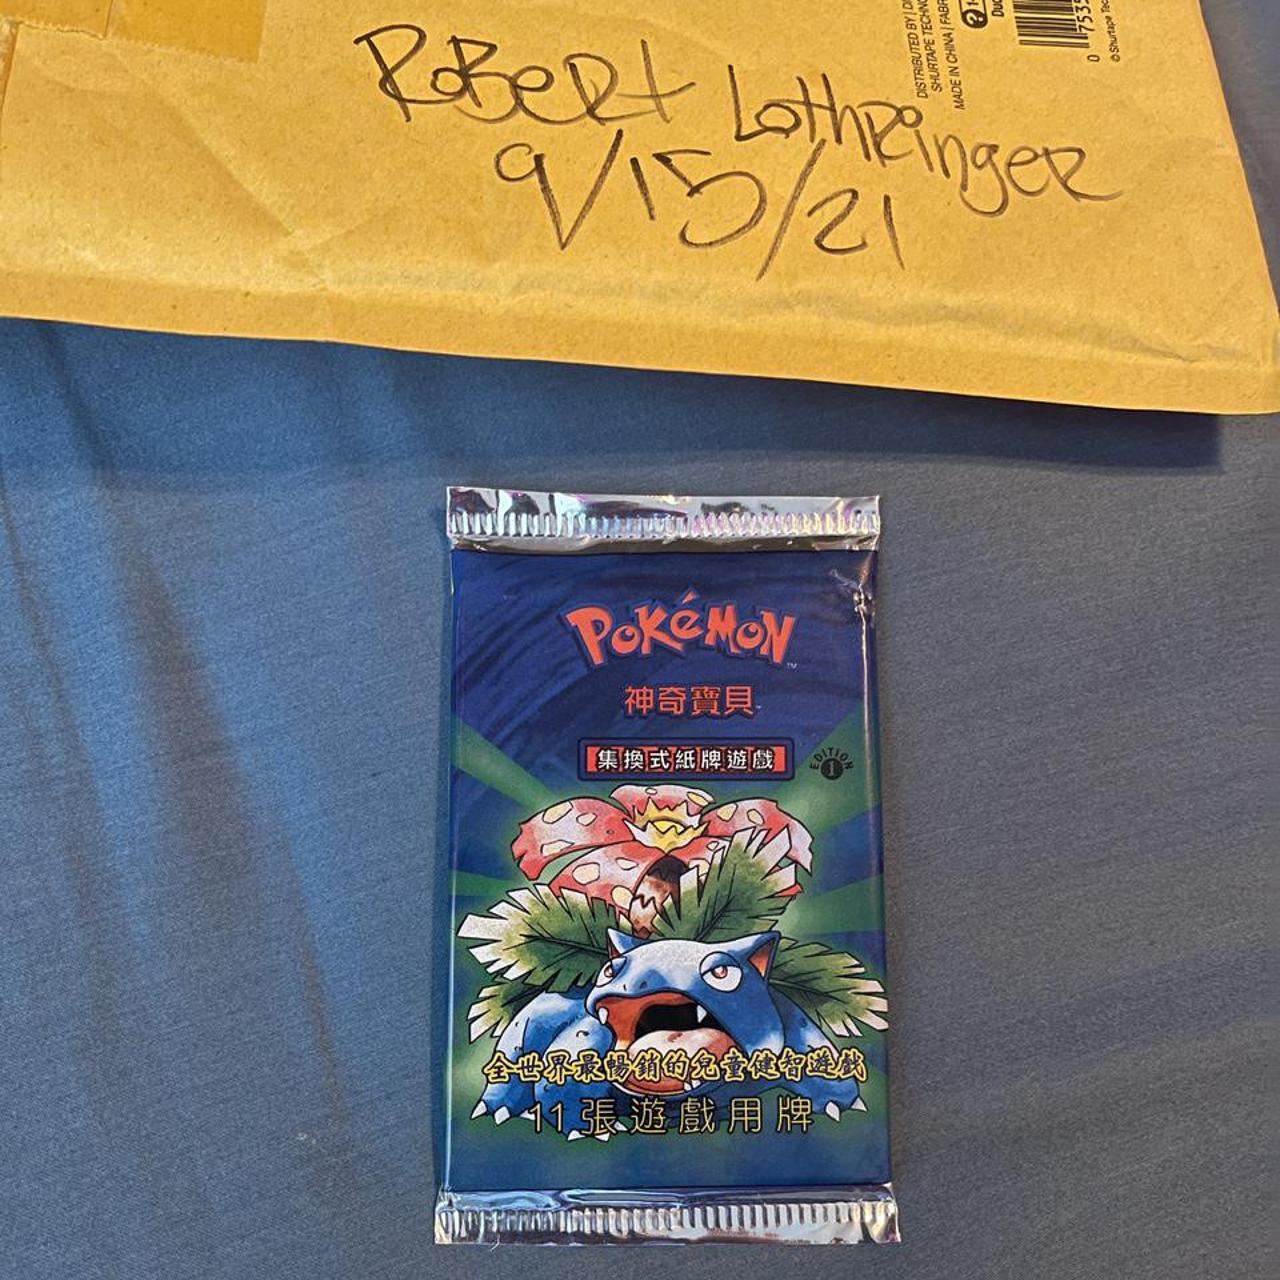 Product Image 2 - Super rare 1st edition Pokémon